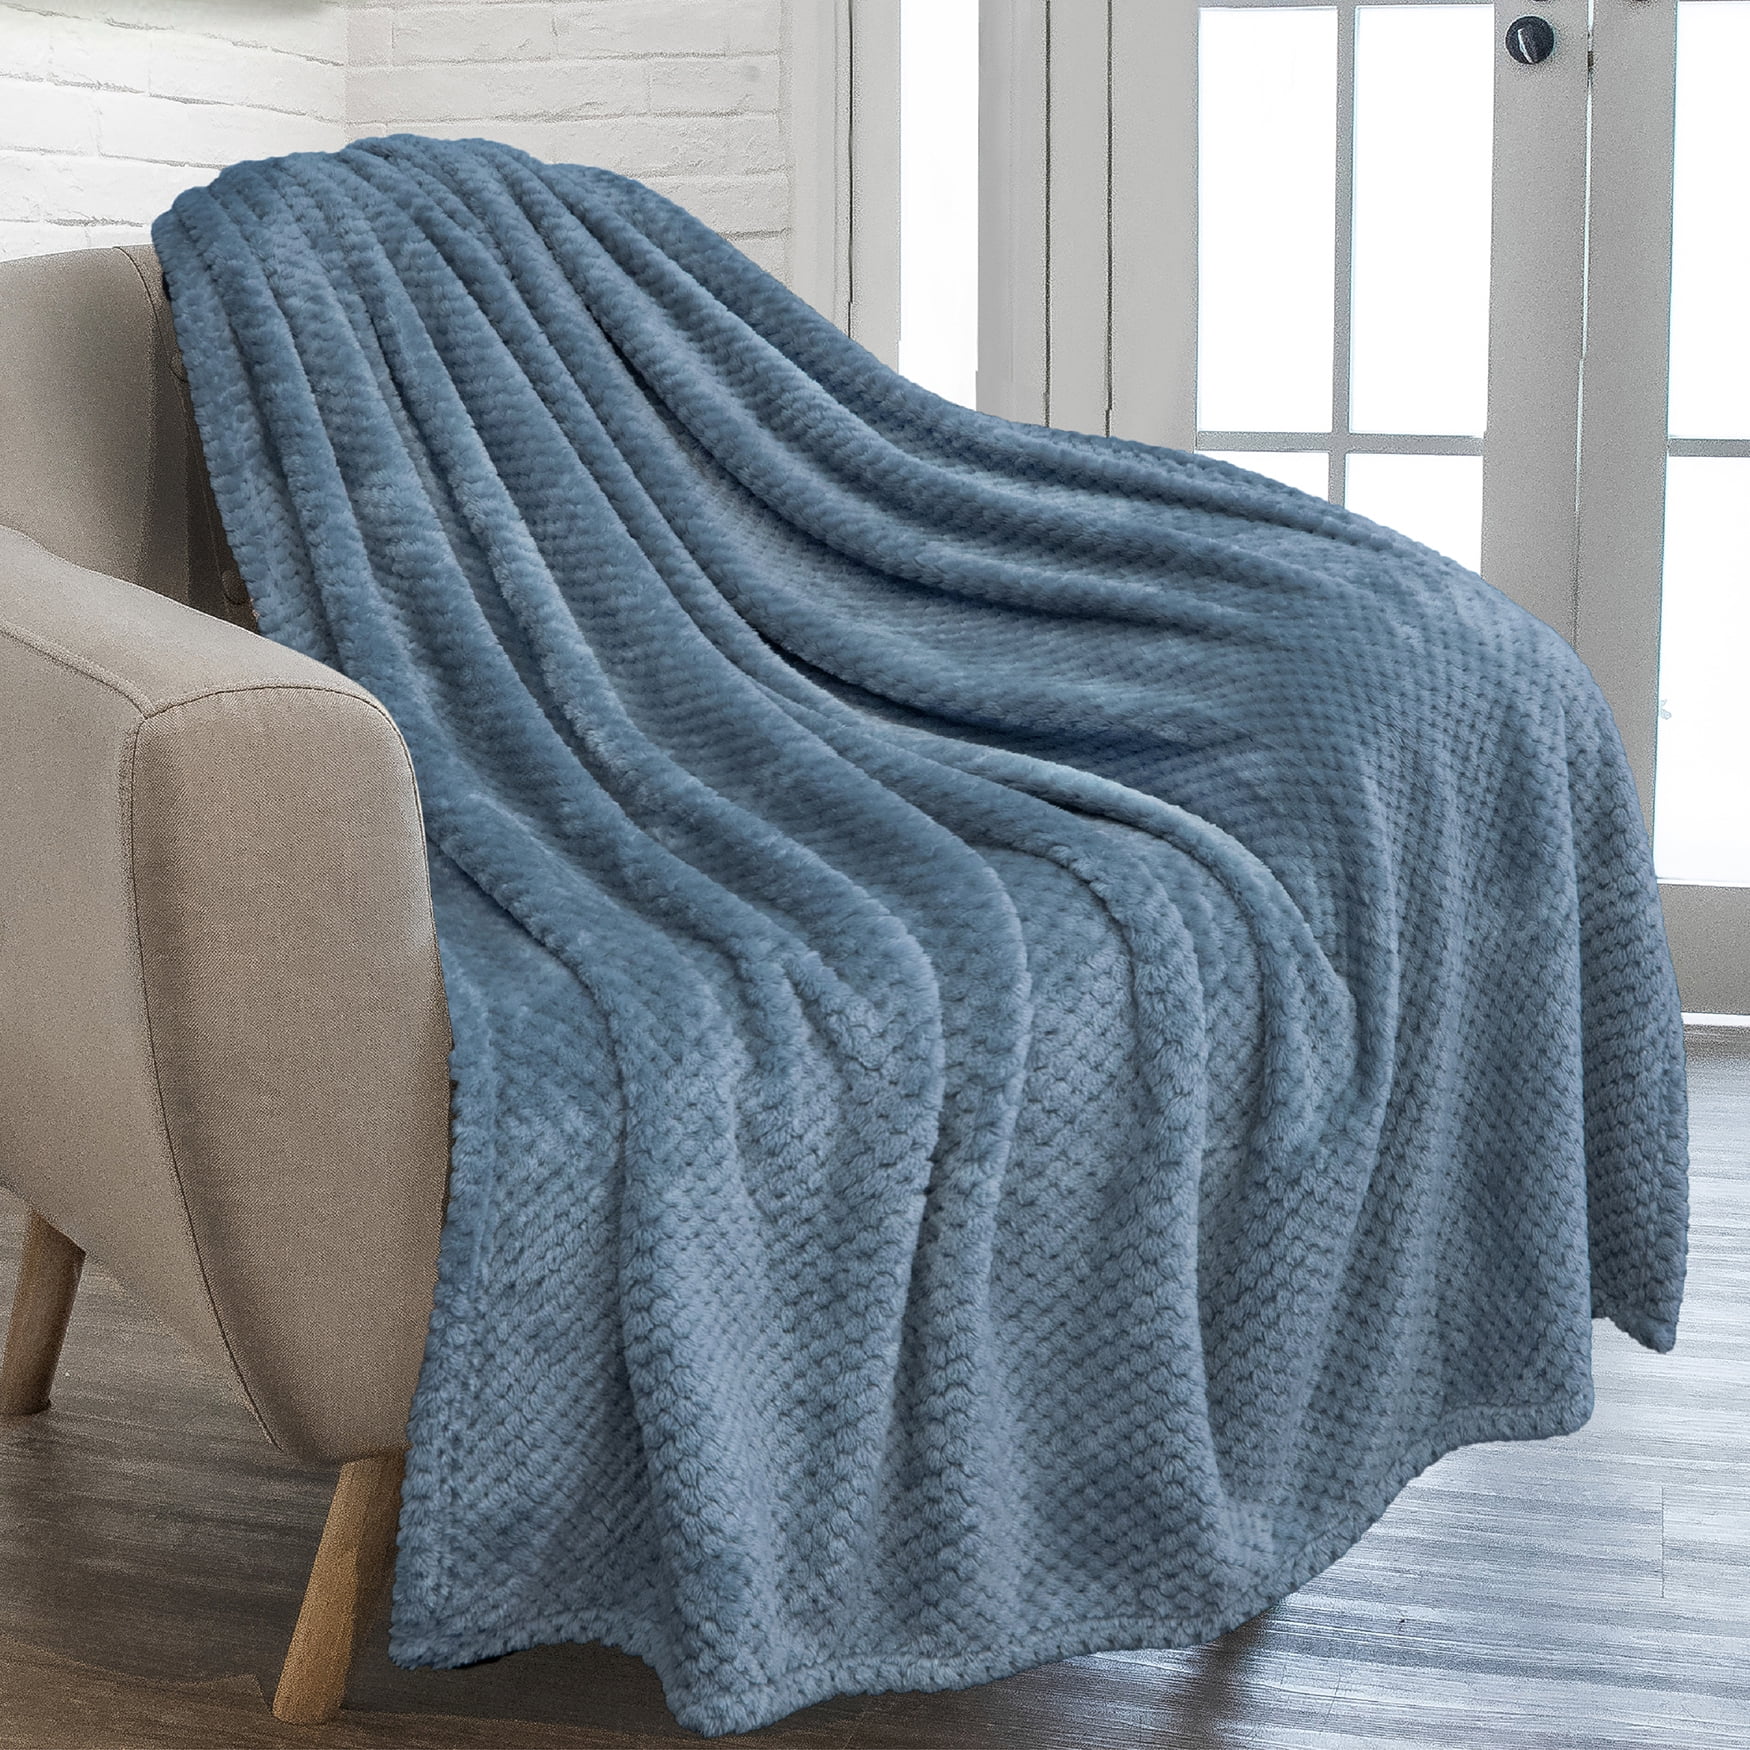 Twin XL Lavender Elegant Comfort ™ Luxury Velvety Softness Fuzzy Plush Micro-Velour Ultra-Soft Blanket 100% Hypoallergenic